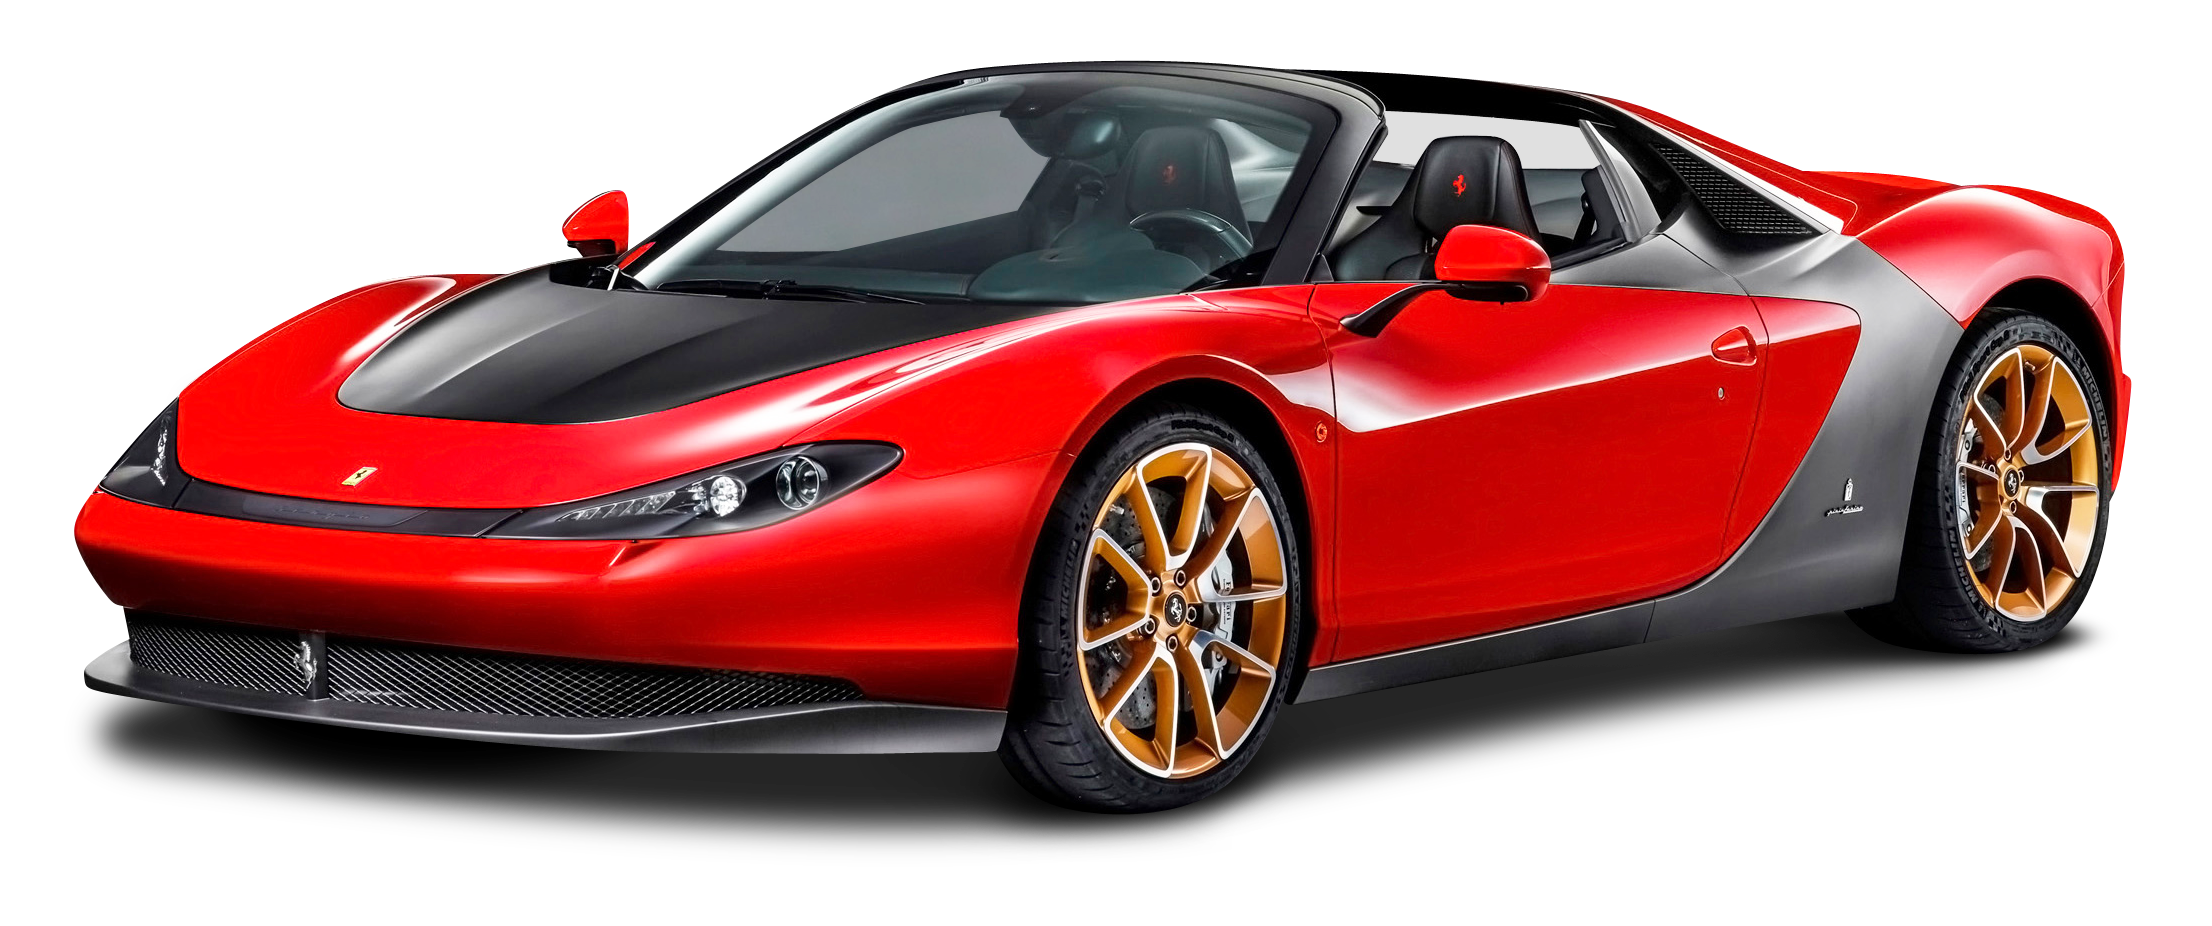 Ferrari Sergio Red Car PNG Image - PurePNG | Free transparent CC0 ...